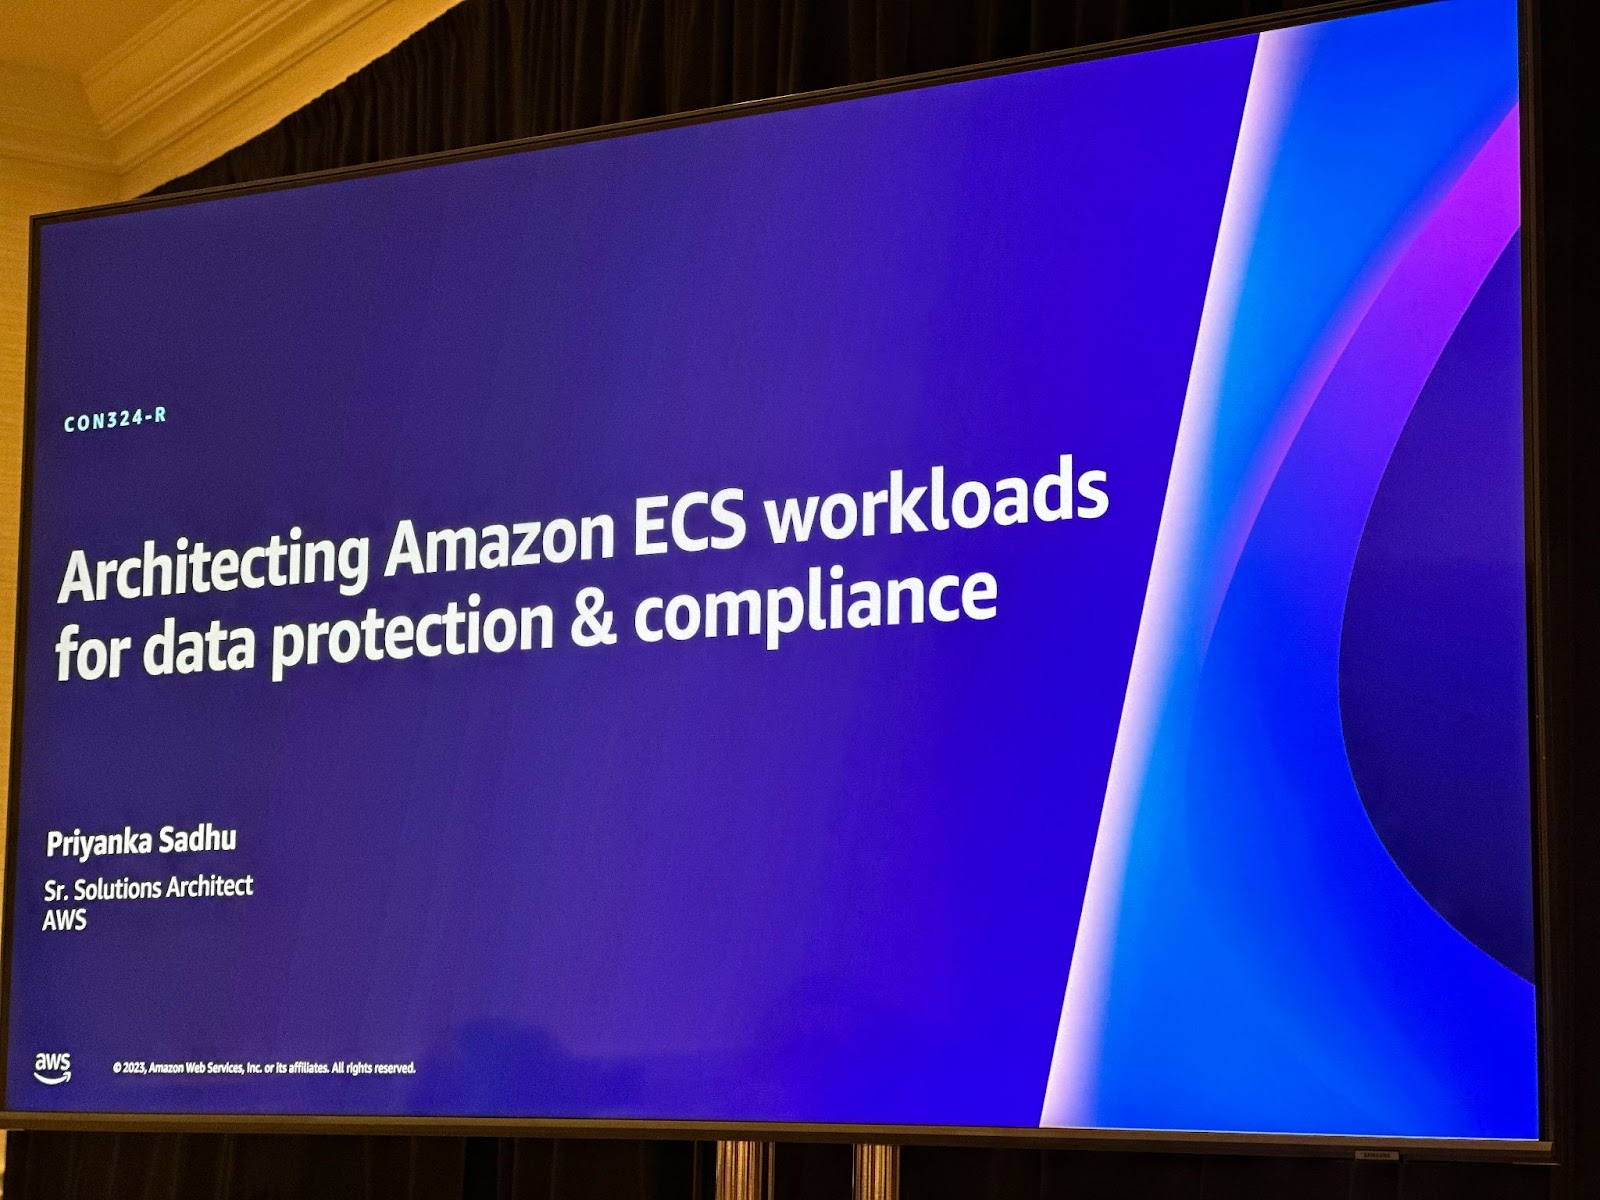 Architecting Amazon ECS workloads for data protection & compliance